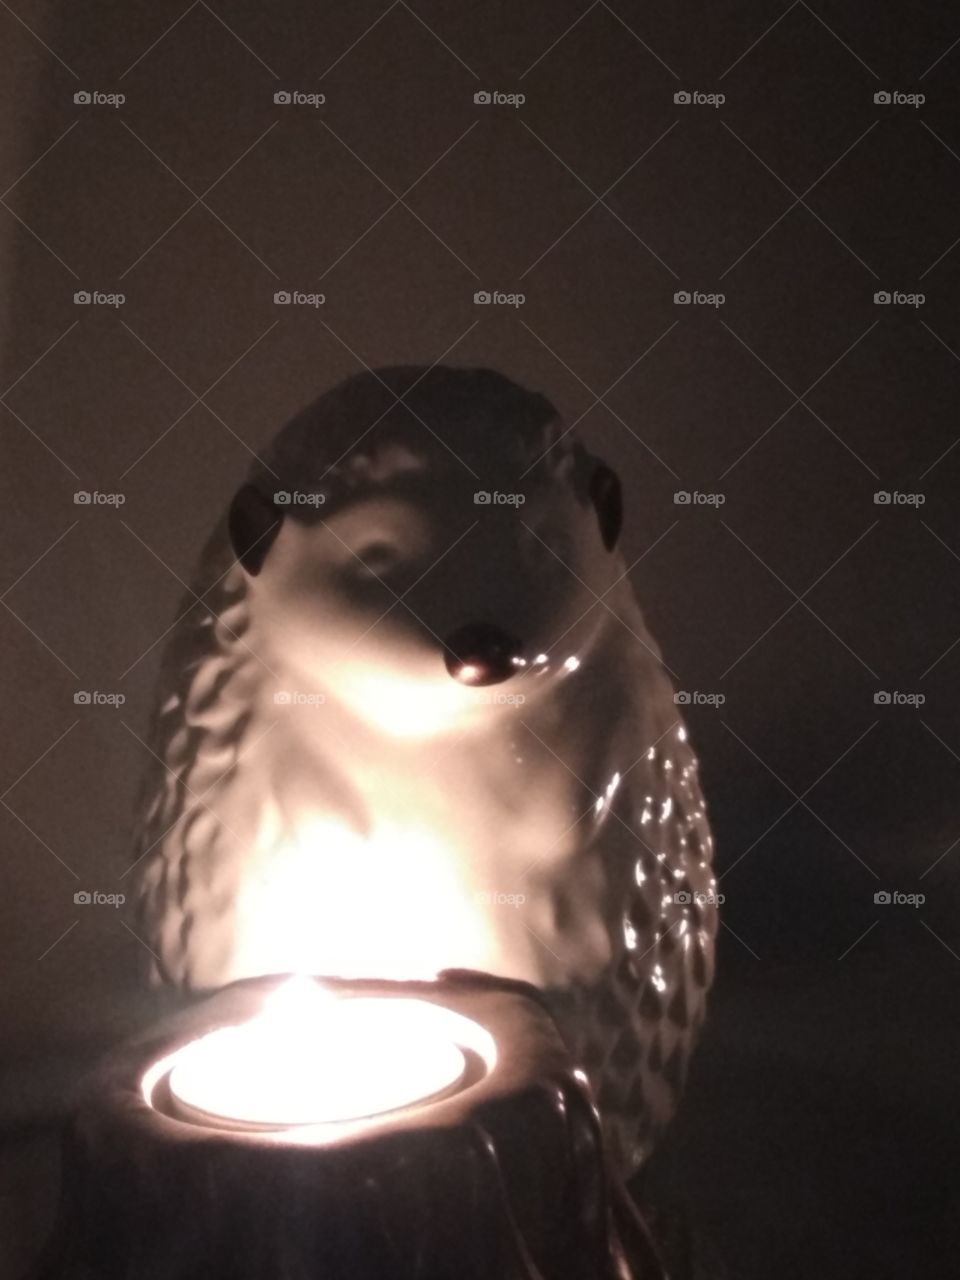 Hedgehog in Candle Light